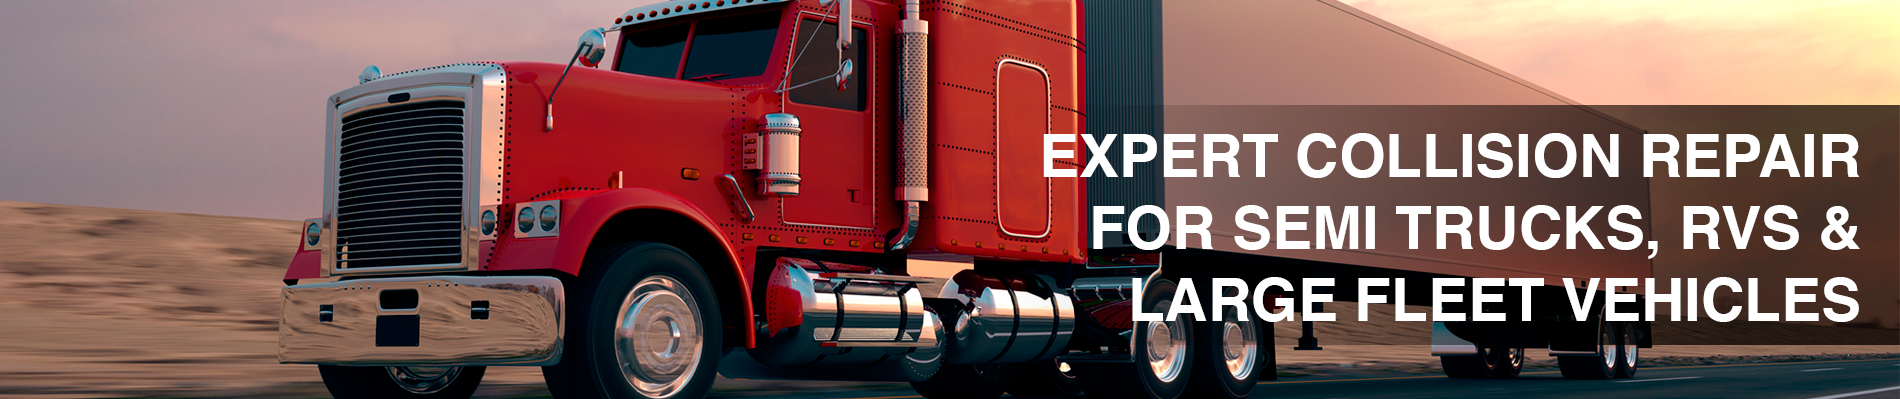 Expert Collision Repair for Semi-Trucks, RVs and Large Fleet Vehicles